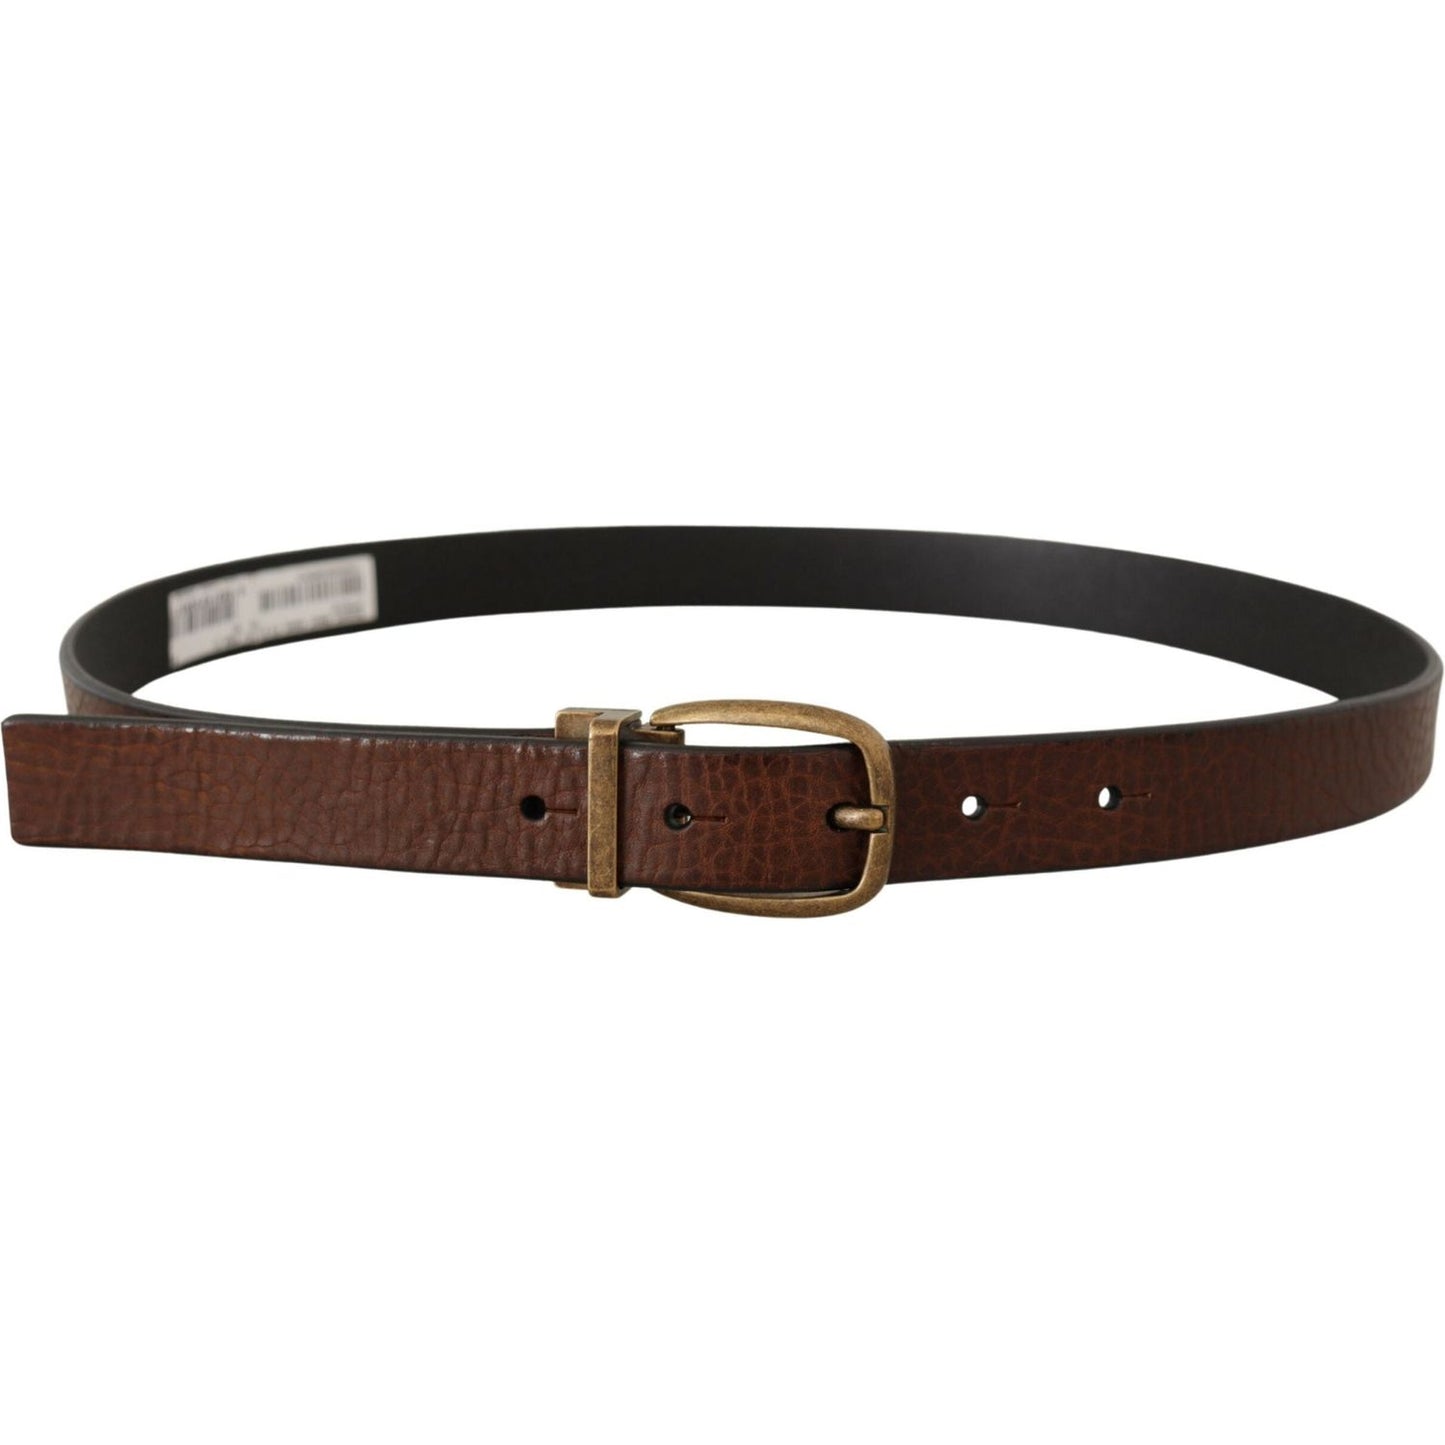 Dolce & Gabbana Elegant Leather Belt with Metal Buckle brown-leather-vintage-style-brass-metal-buckle-belt